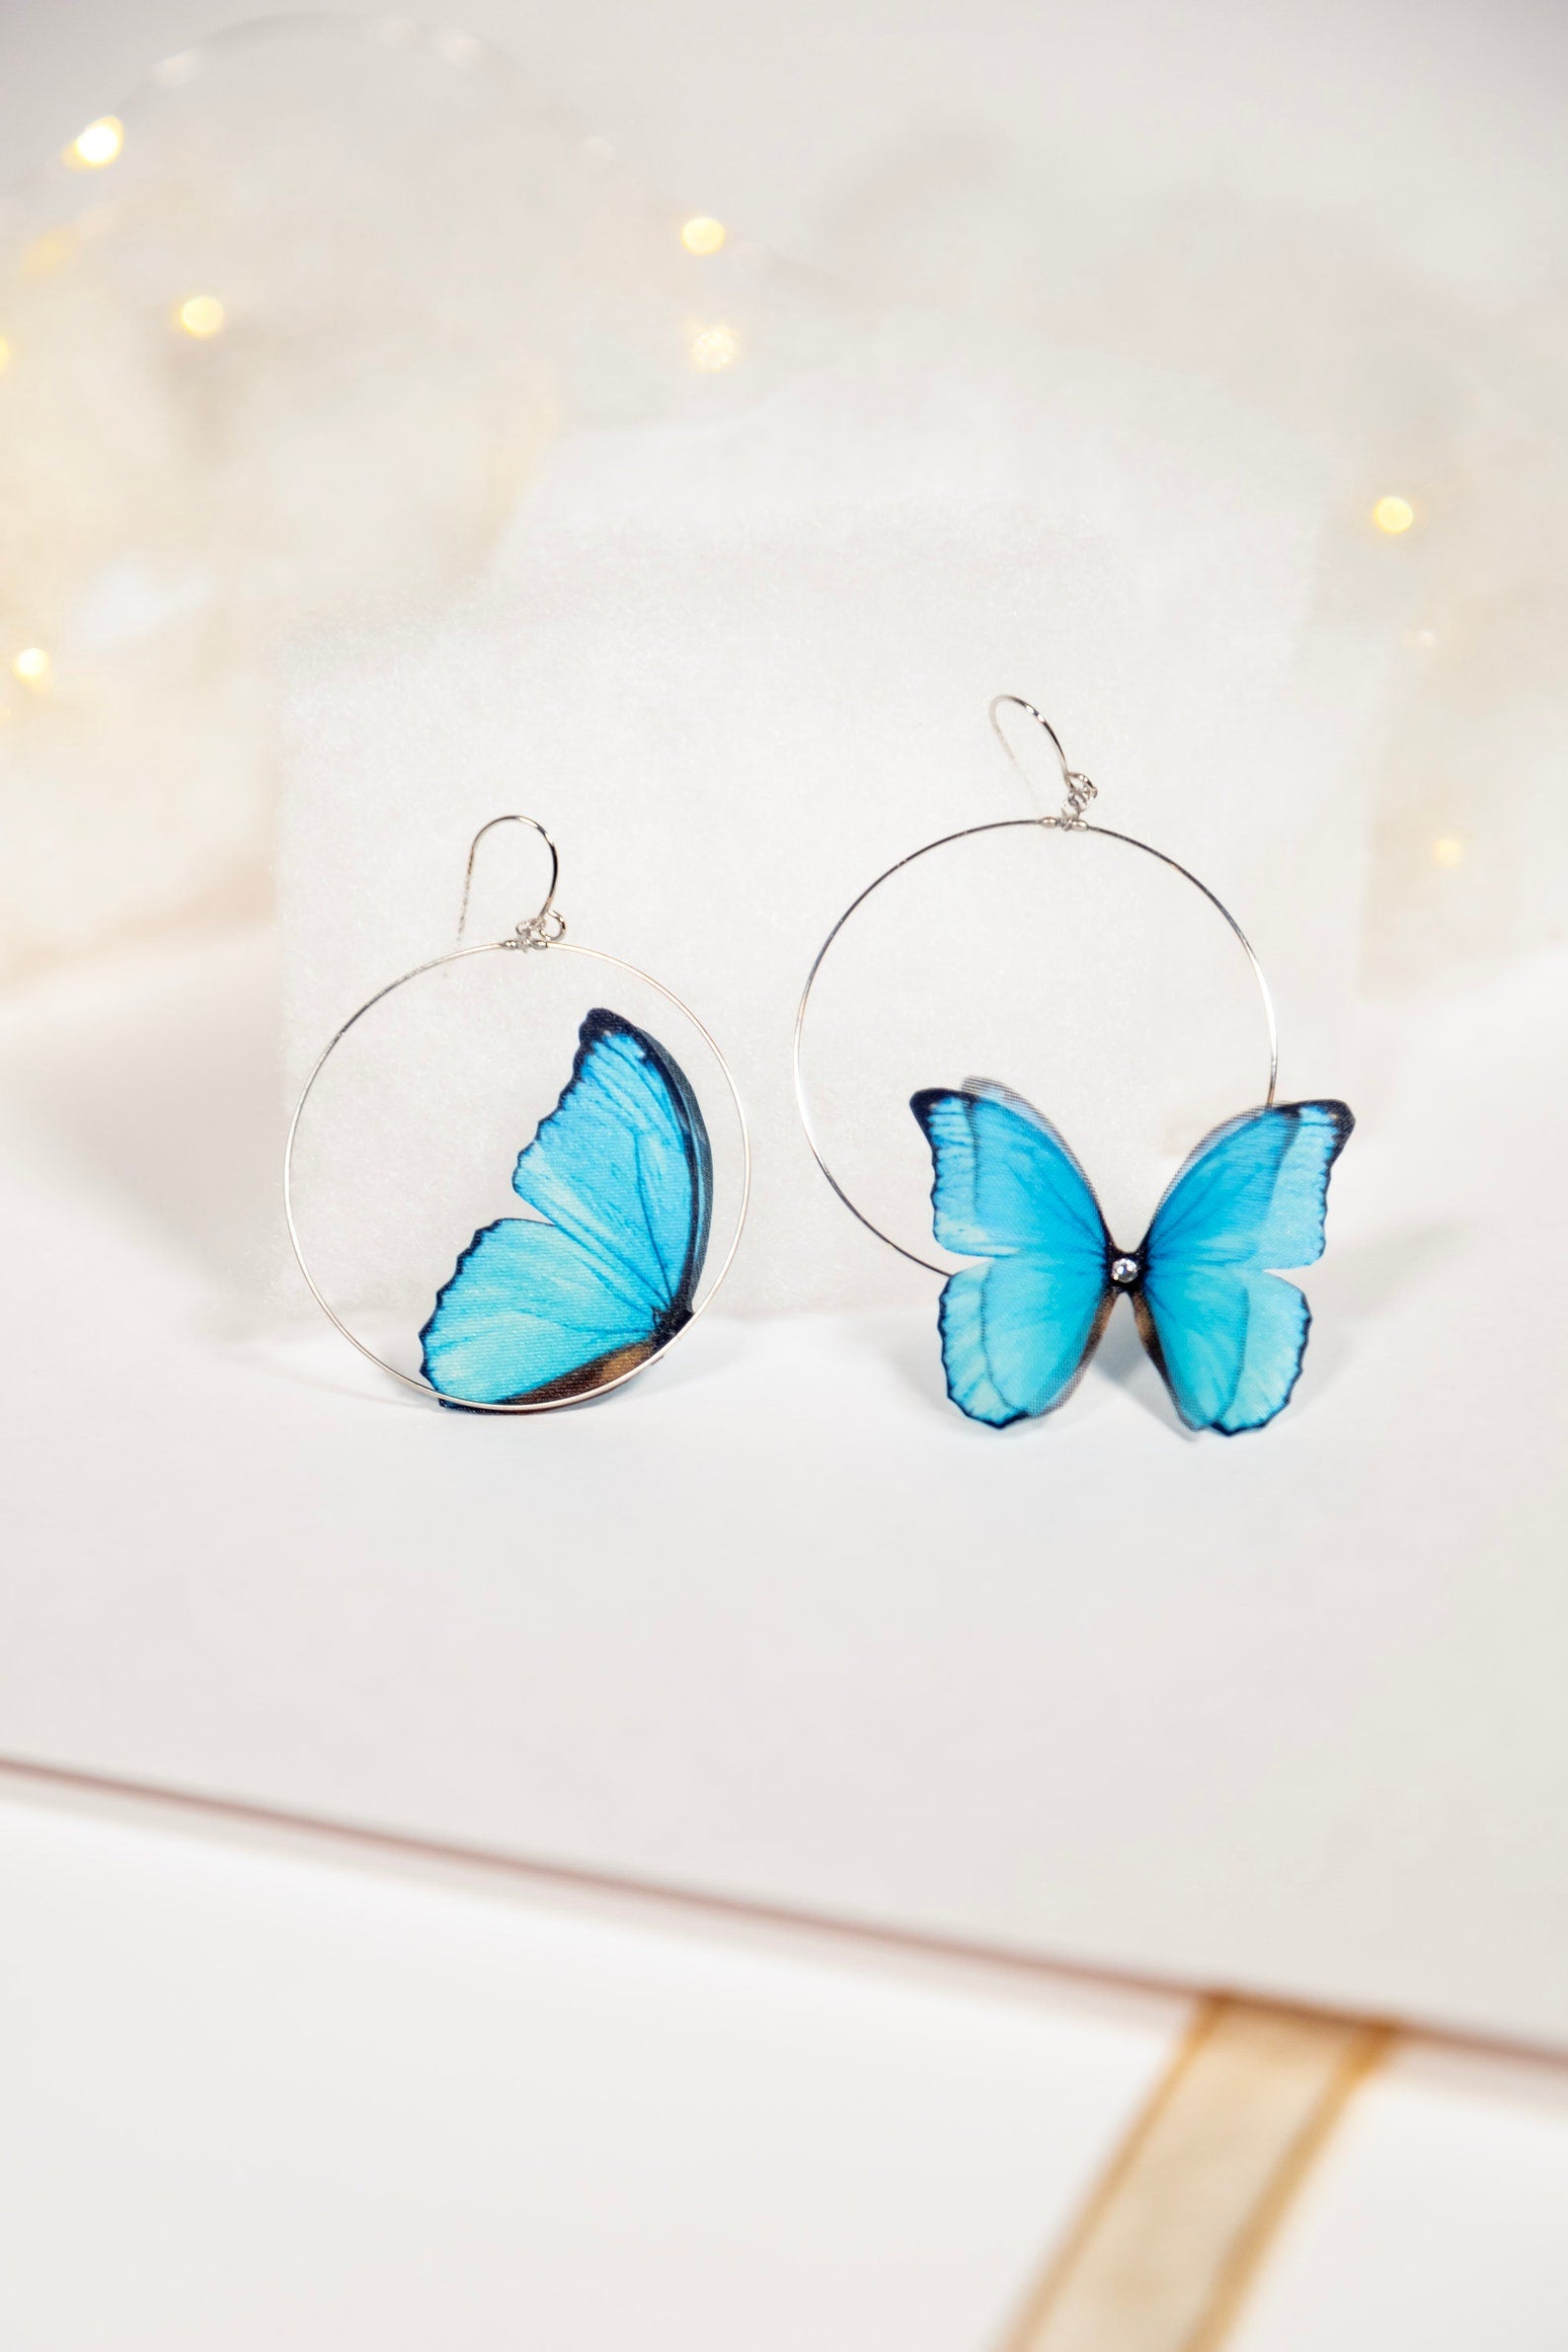 Blue Butterfly Hoop Earrings Modeled on Ear with Boho Style Clothing